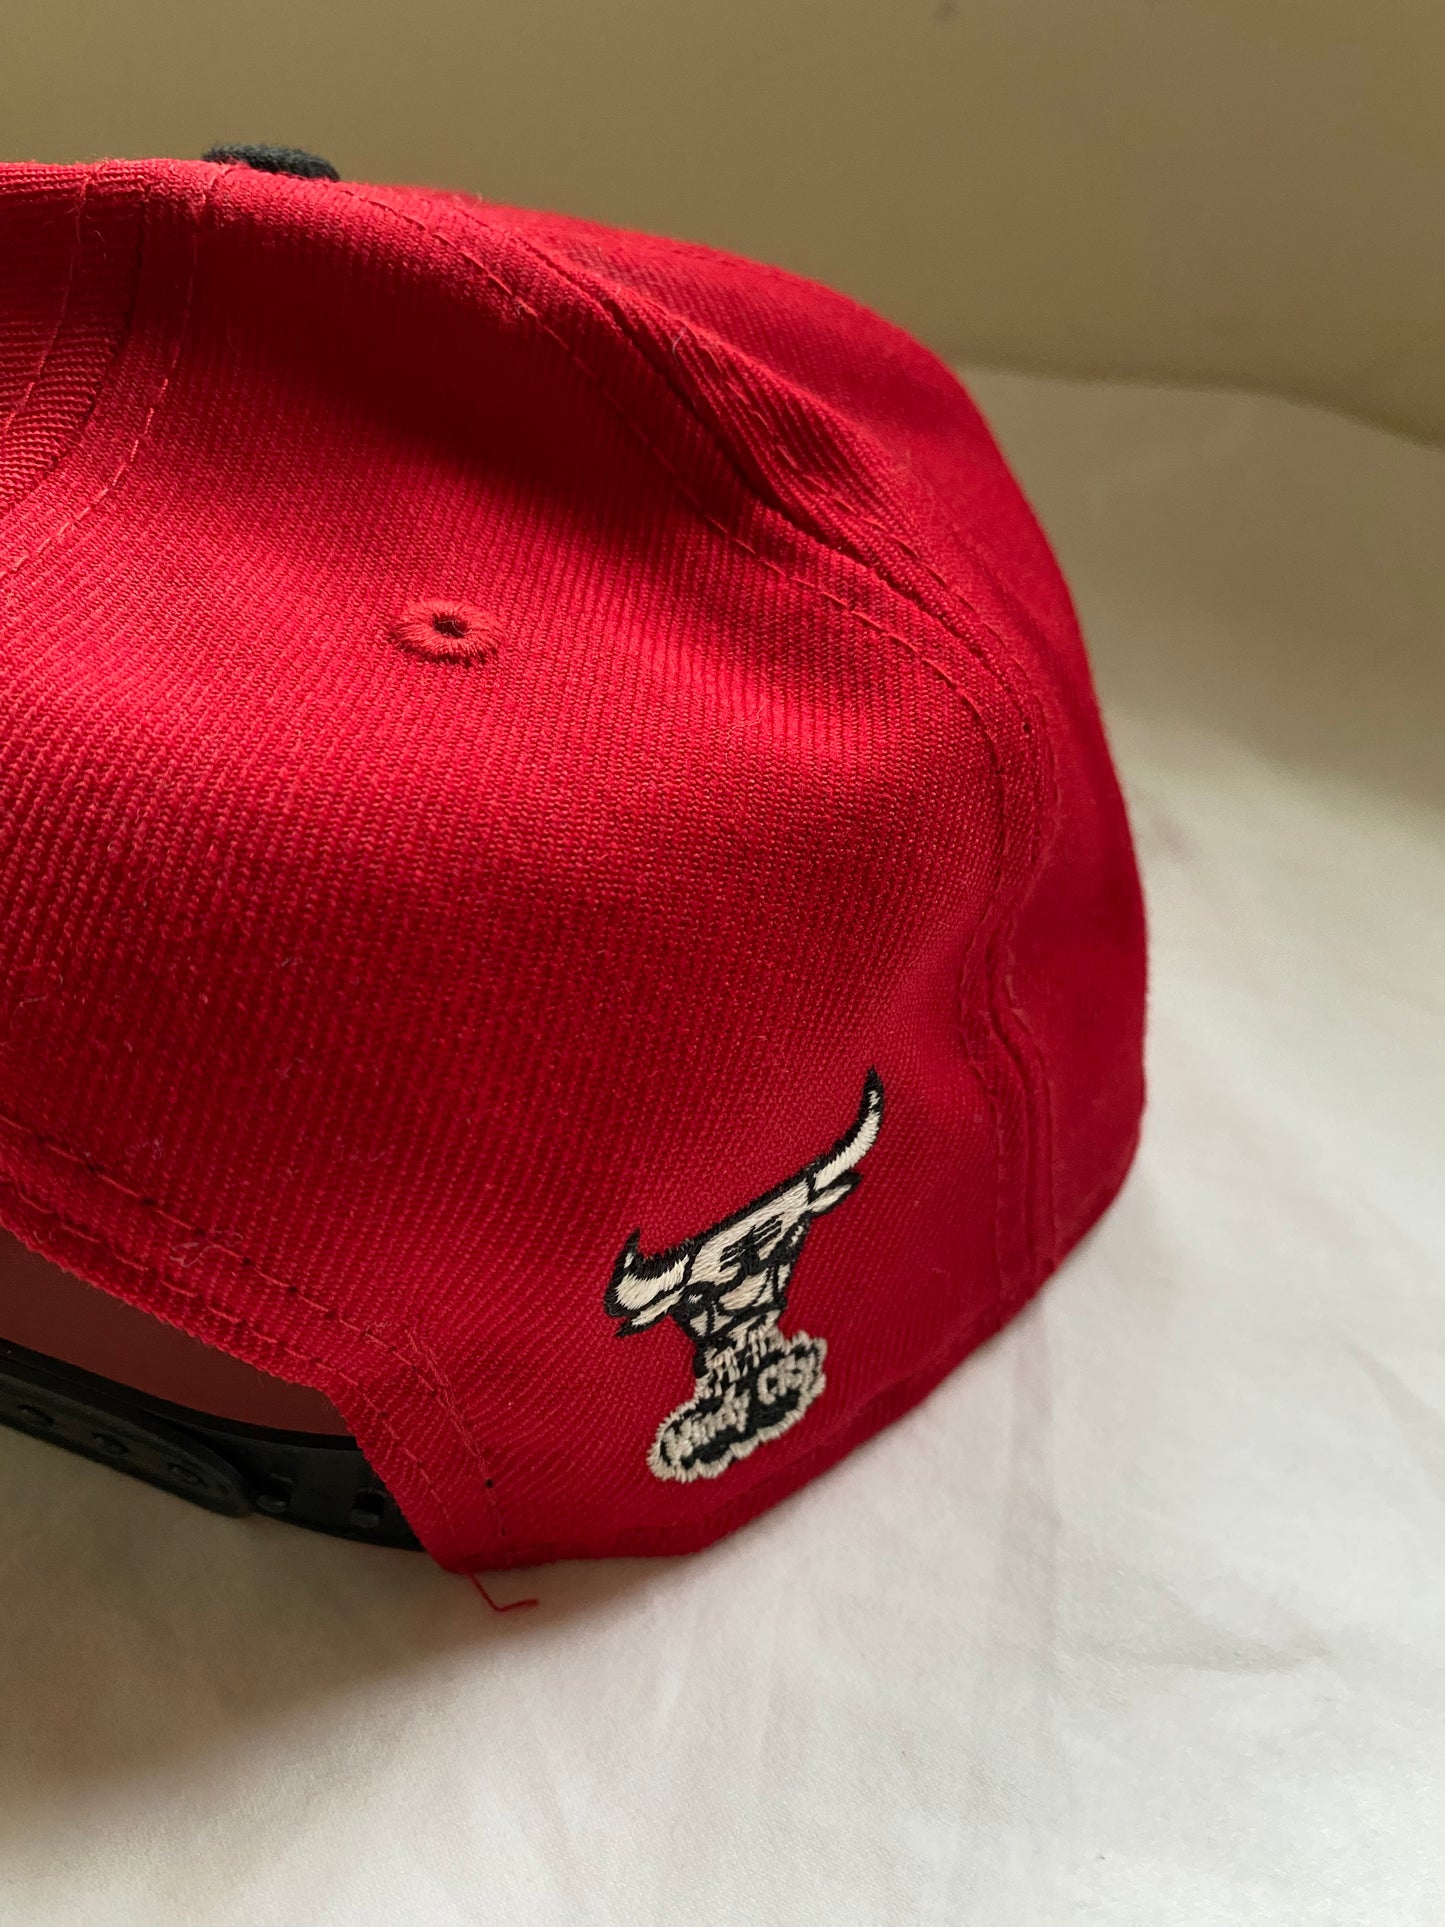 Red Hardwood Classics Chicago Bulls Hat